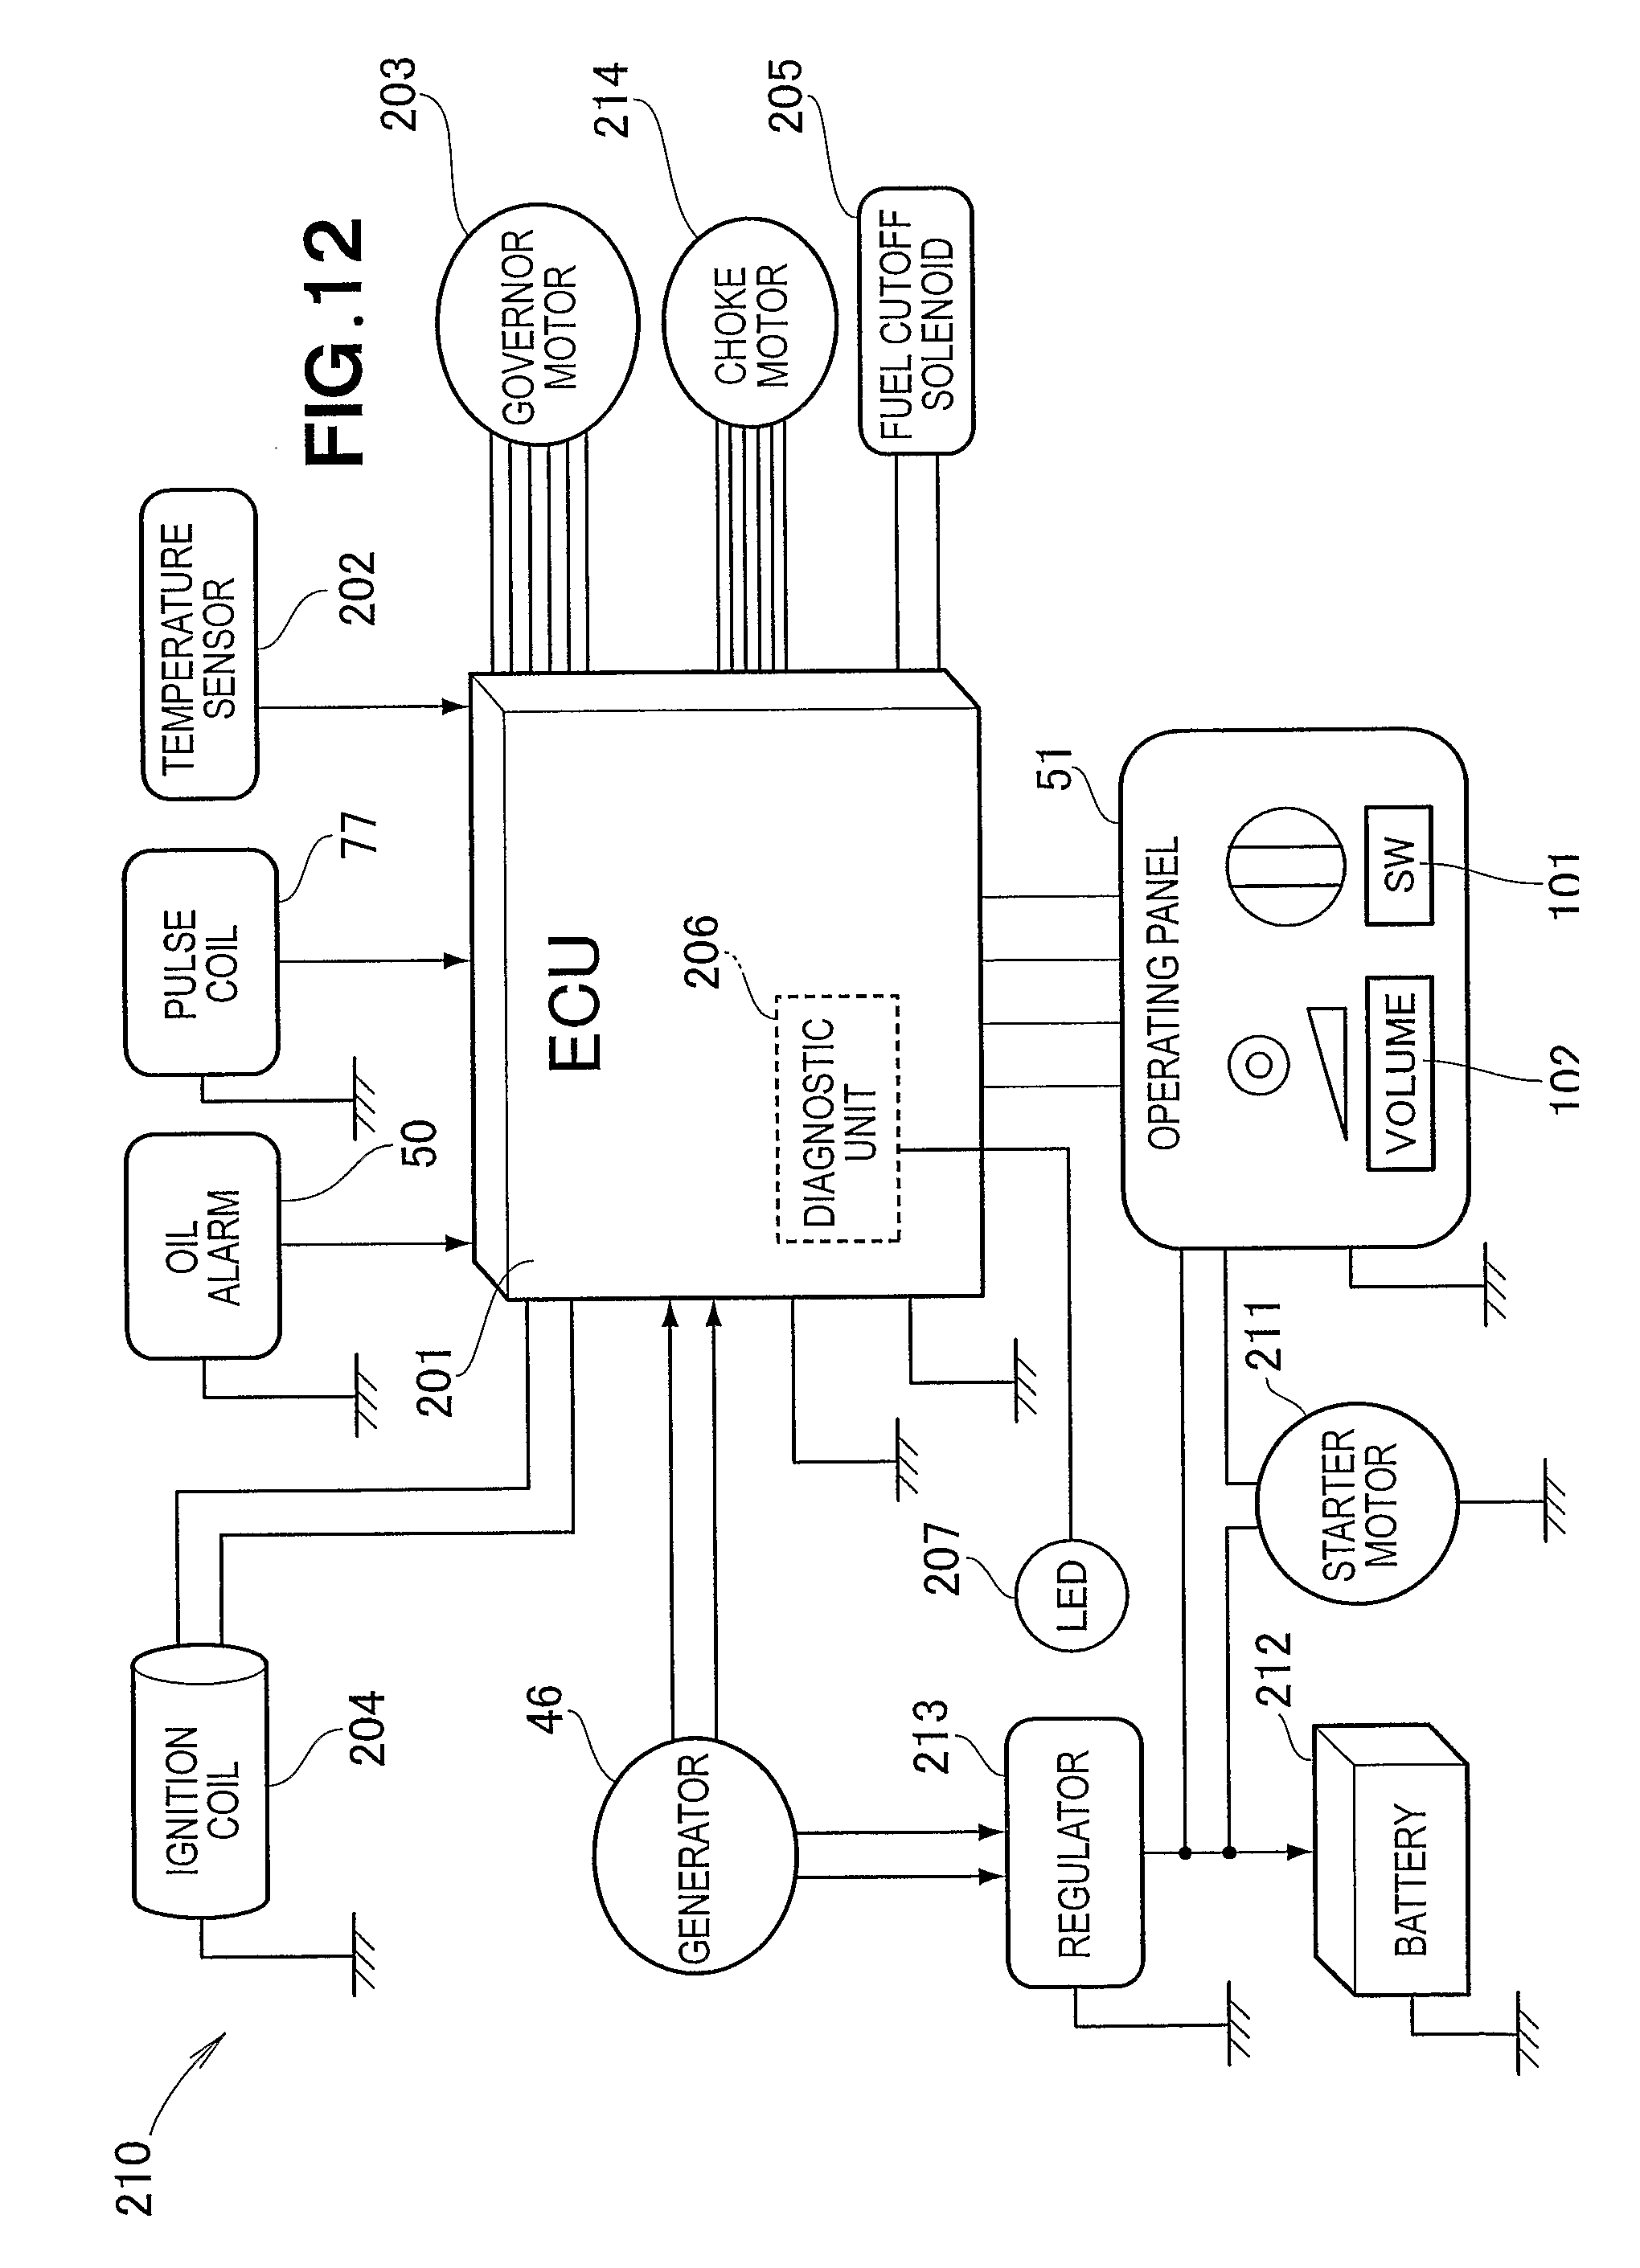 optek fretlight fg 200 wiring diagram